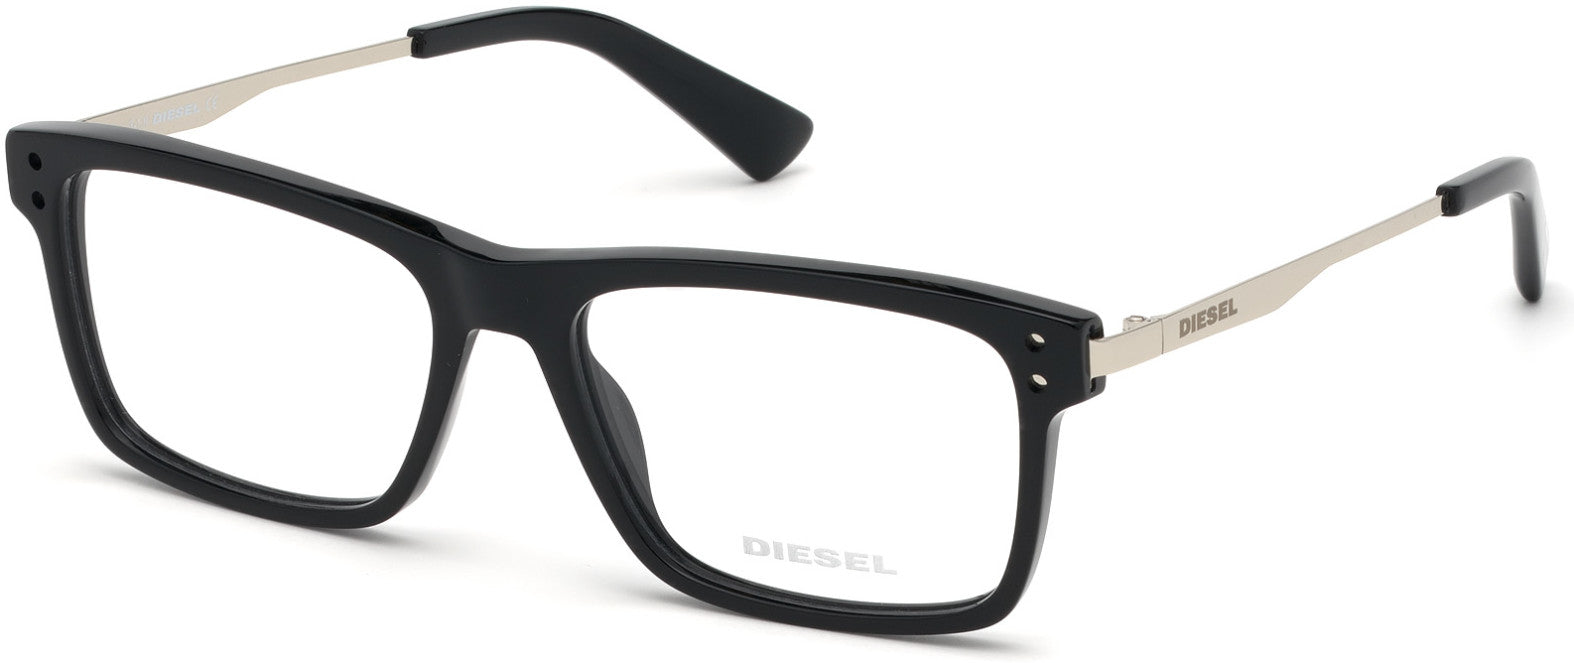 Diesel DL5296 Rectangular Eyeglasses 001-001 - Shiny Black